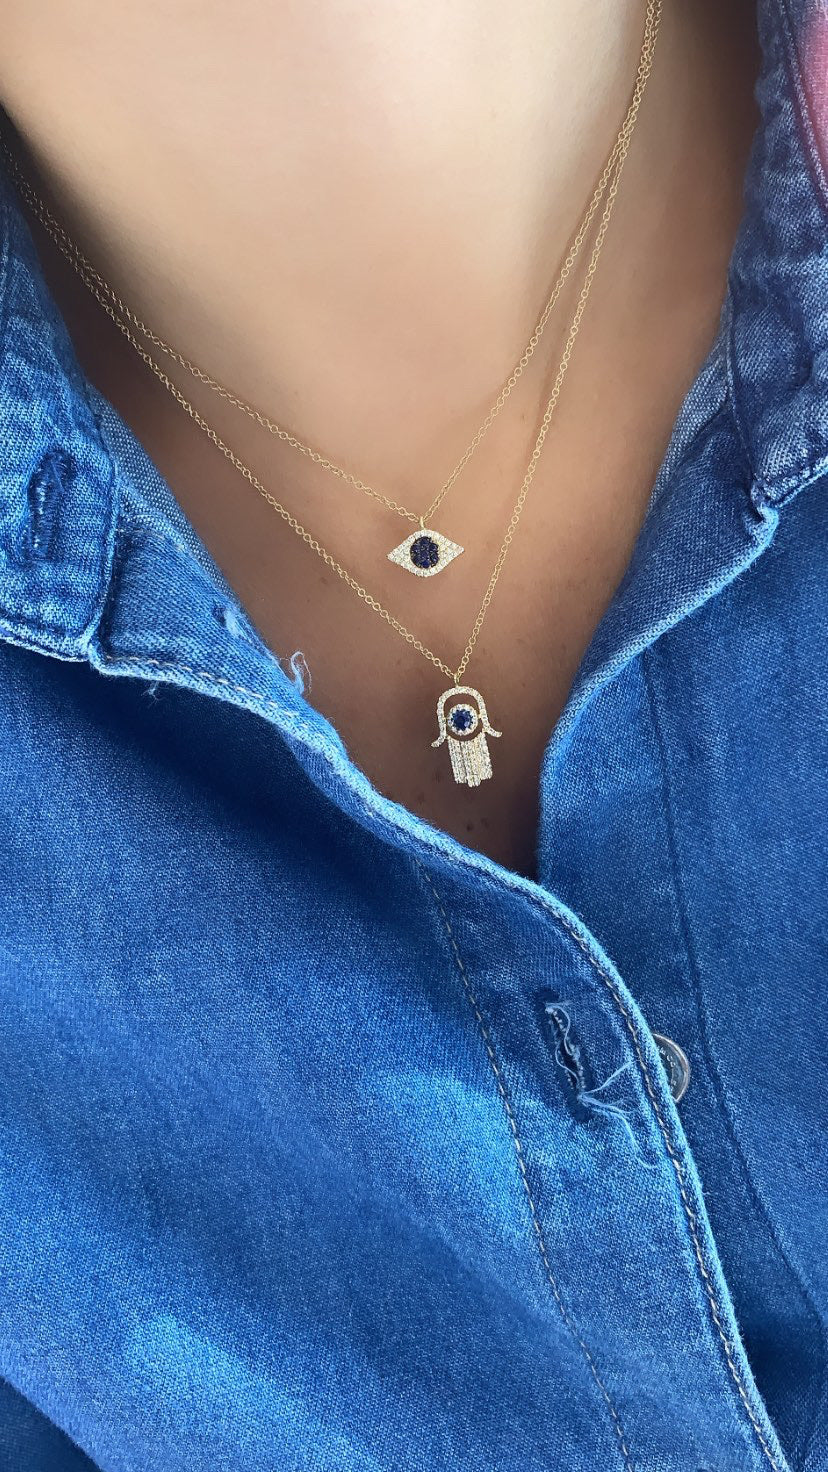 Diamond Blue Sapphire Hamsa Necklace